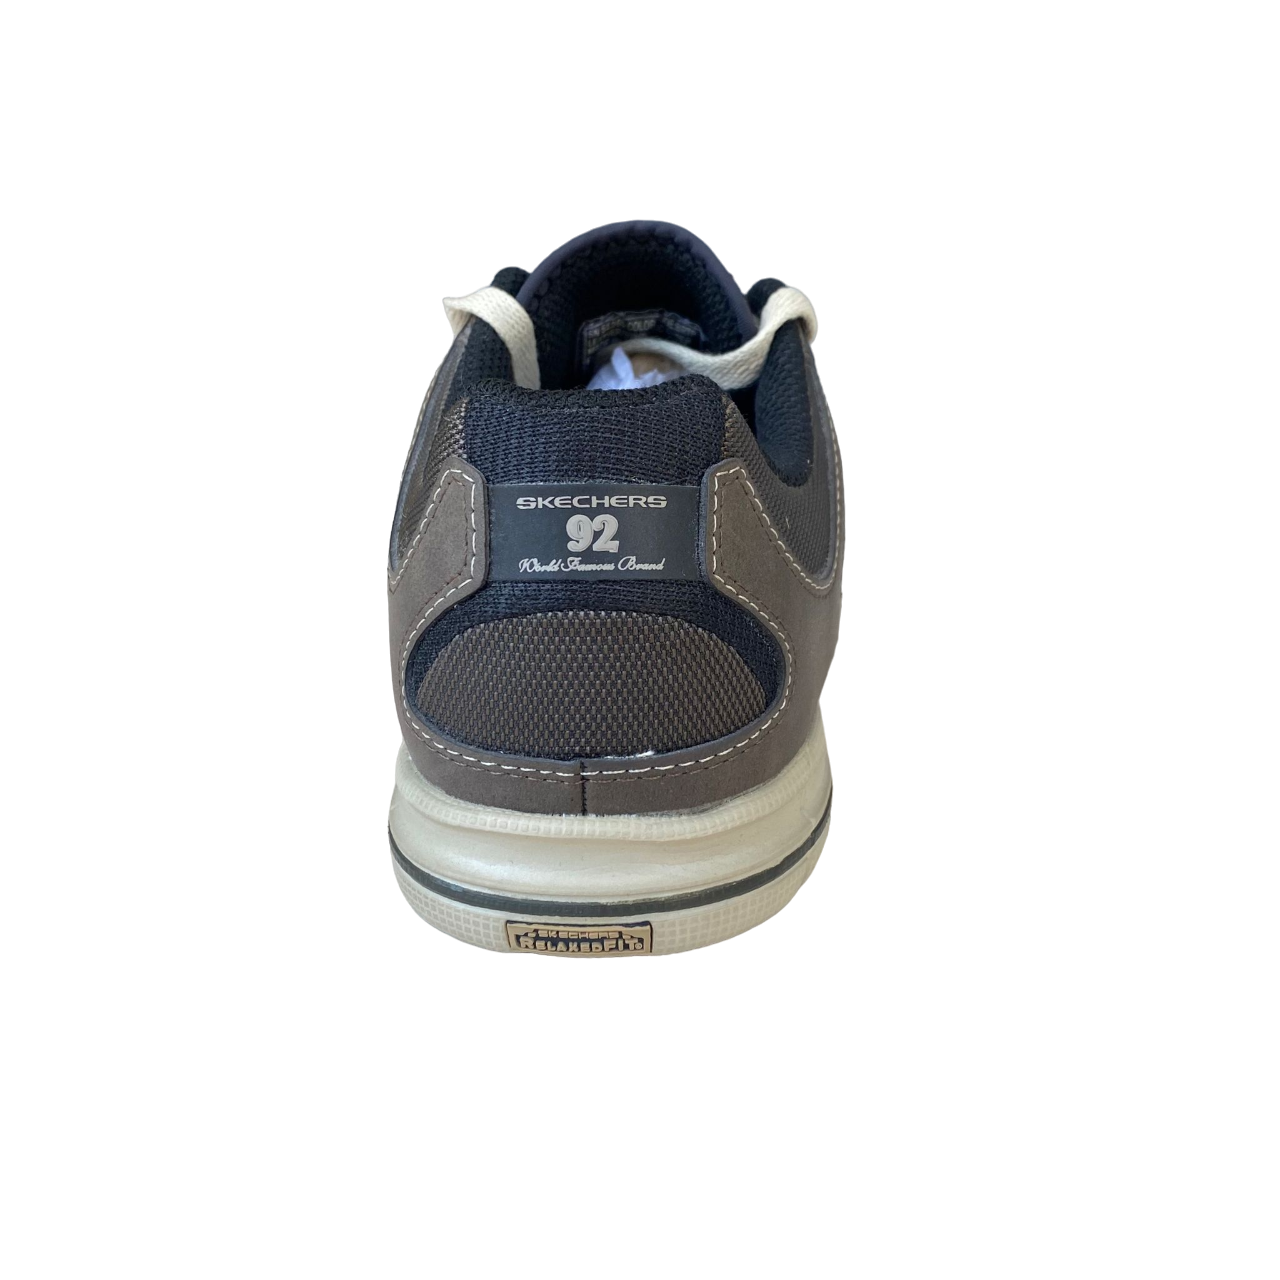 Skechers scarpa casual da uomo Arcade II Phase 51265 BRTP brown-taupe